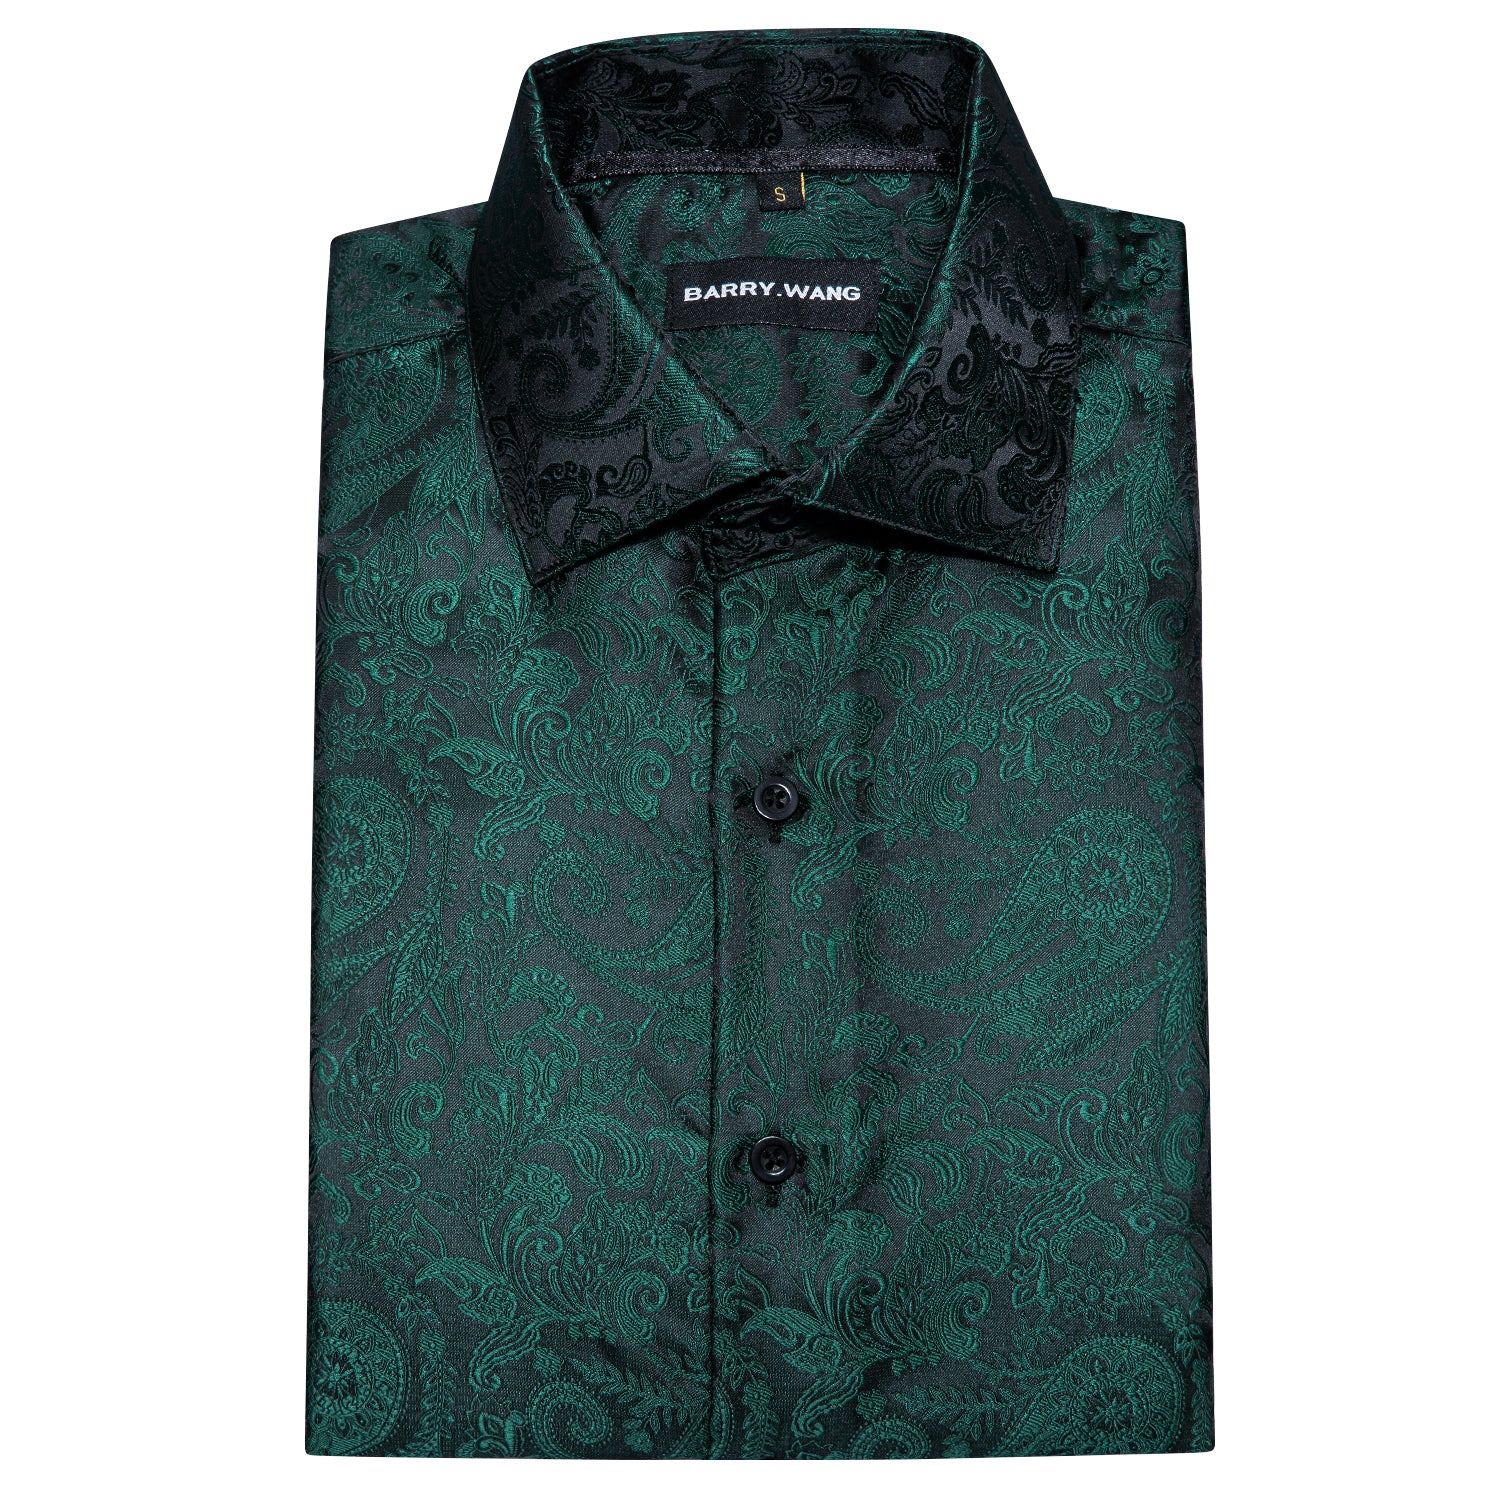 Barry.wang New Green Silk Paisley Short Sleeve Daily Slim Fit Men's Shirt